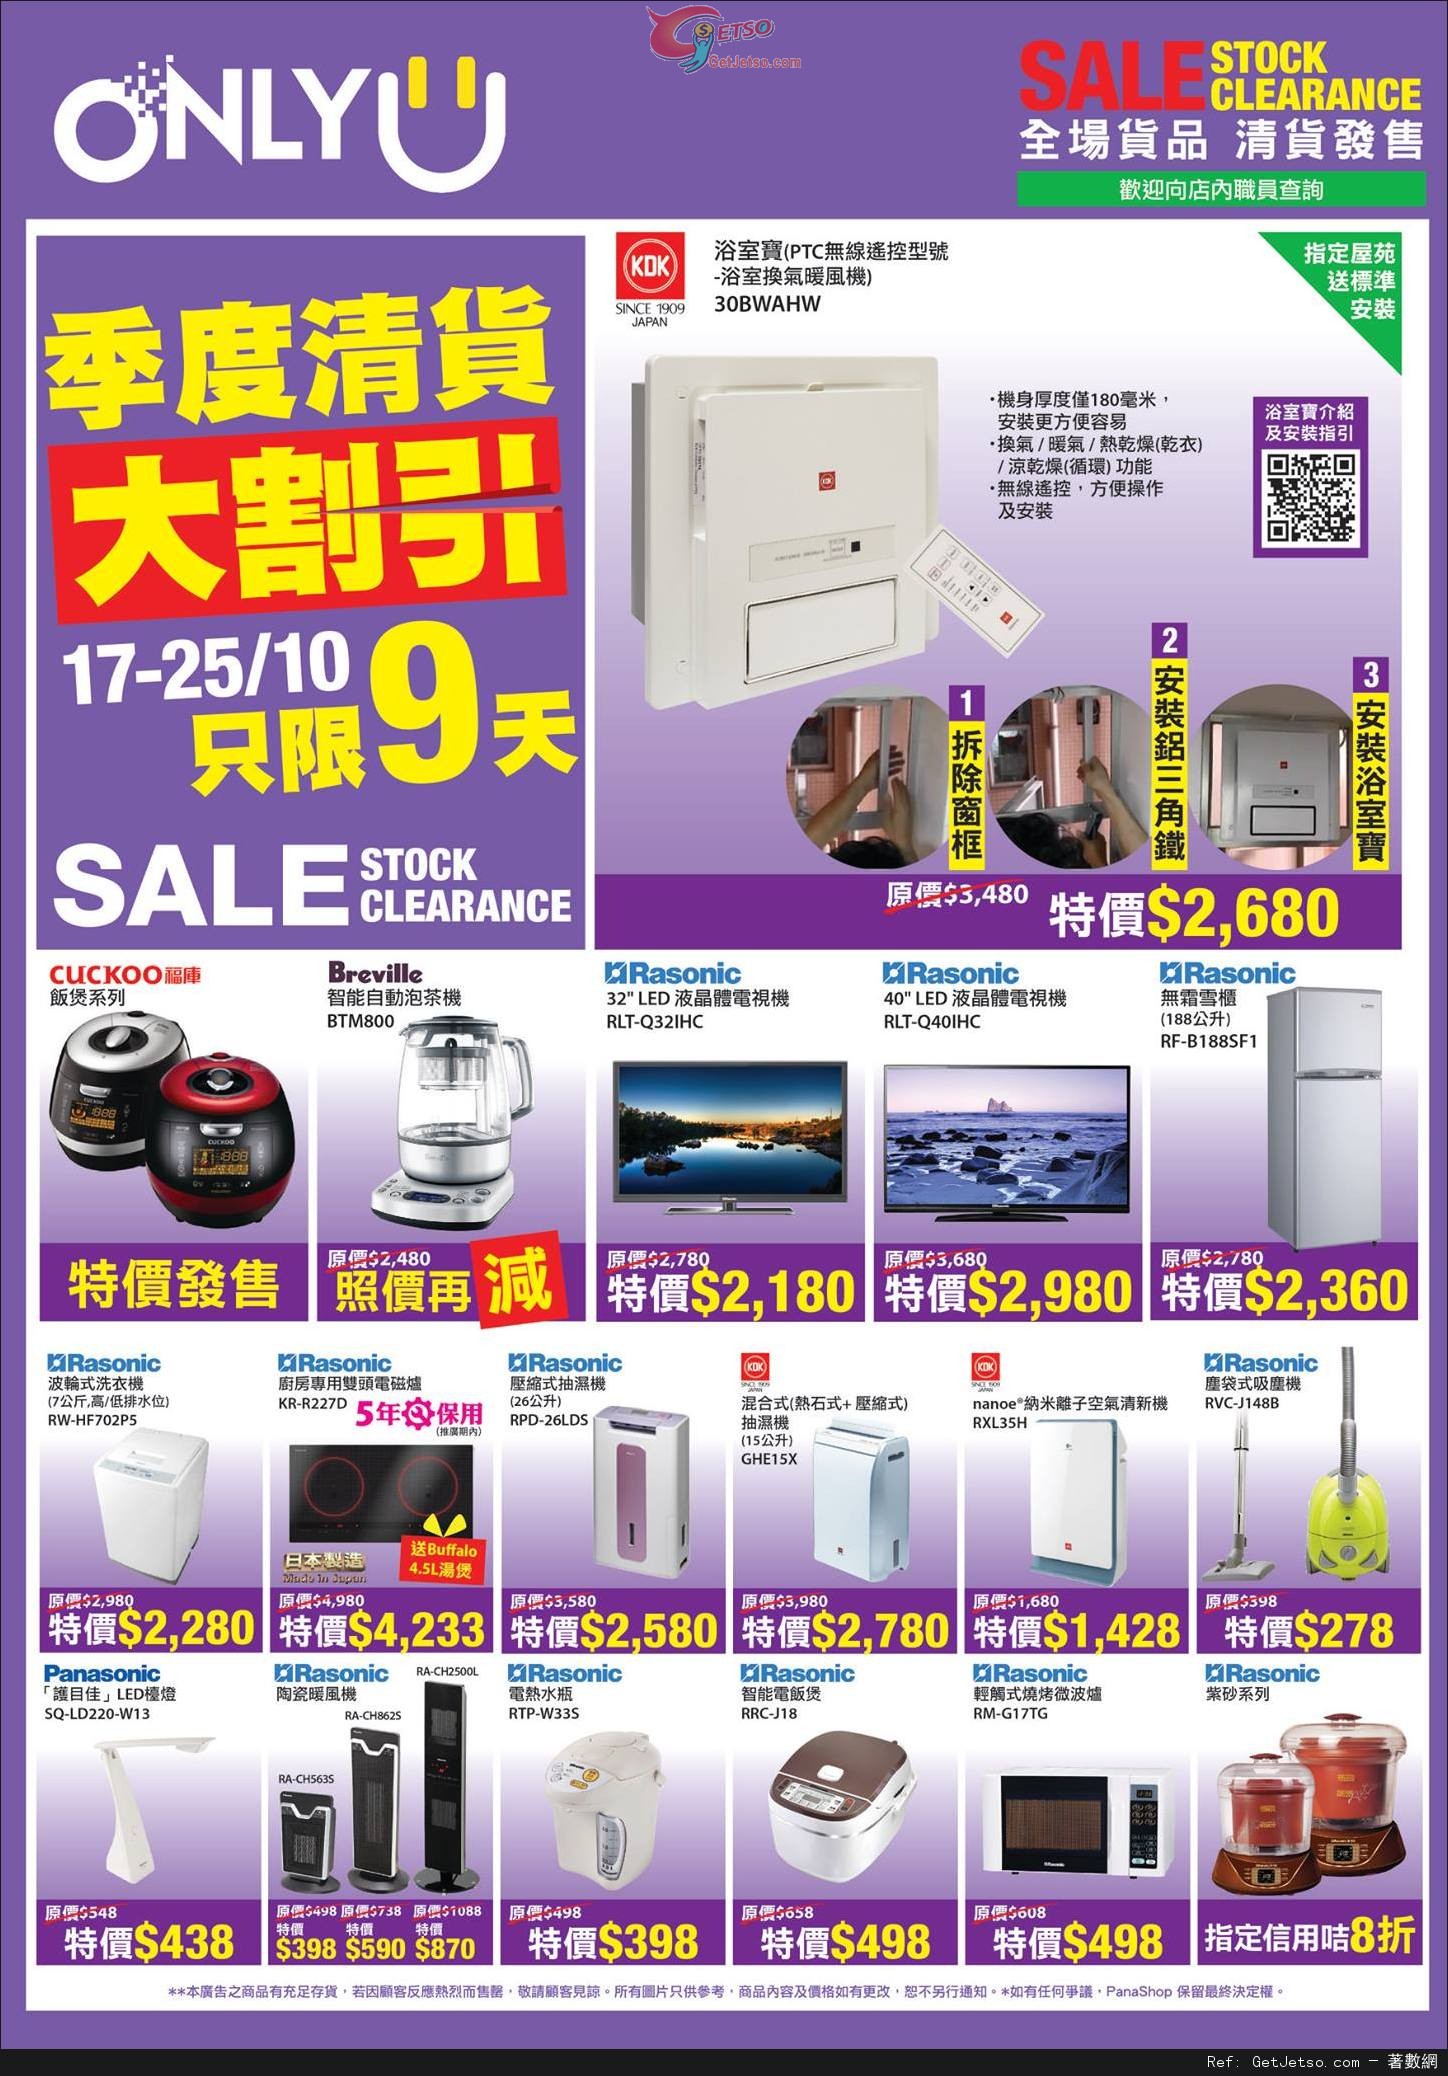 Panasonic/Rasonic 產品專門店季度清貨大割引優惠(15年10月17-25日)圖片6